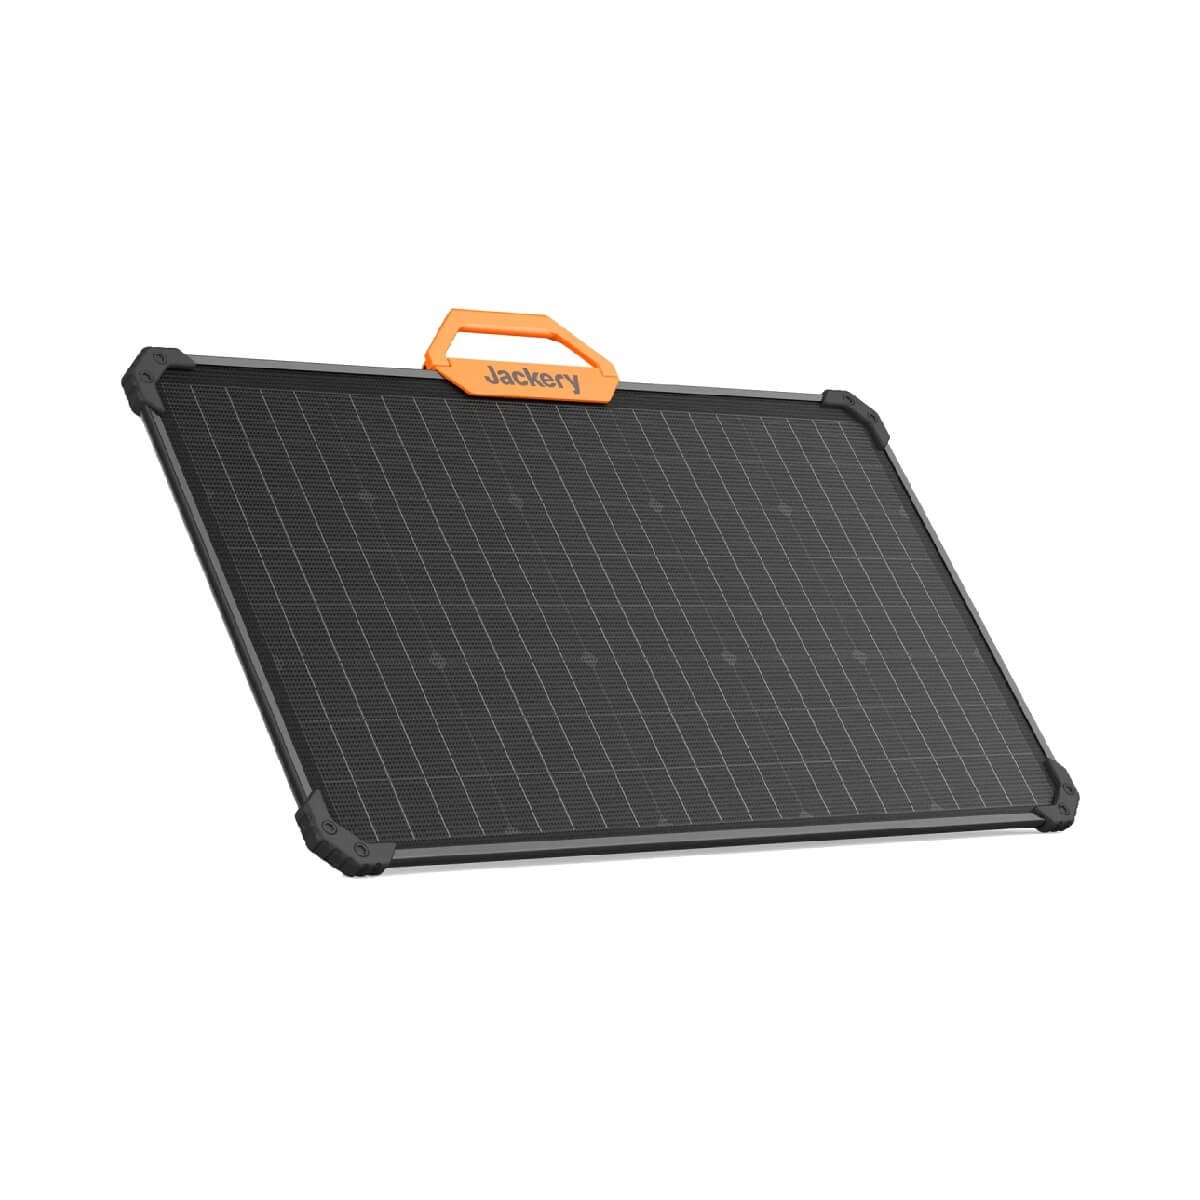 Jackery Solar Panel 80W - SolarSaga Portable Solar Panel